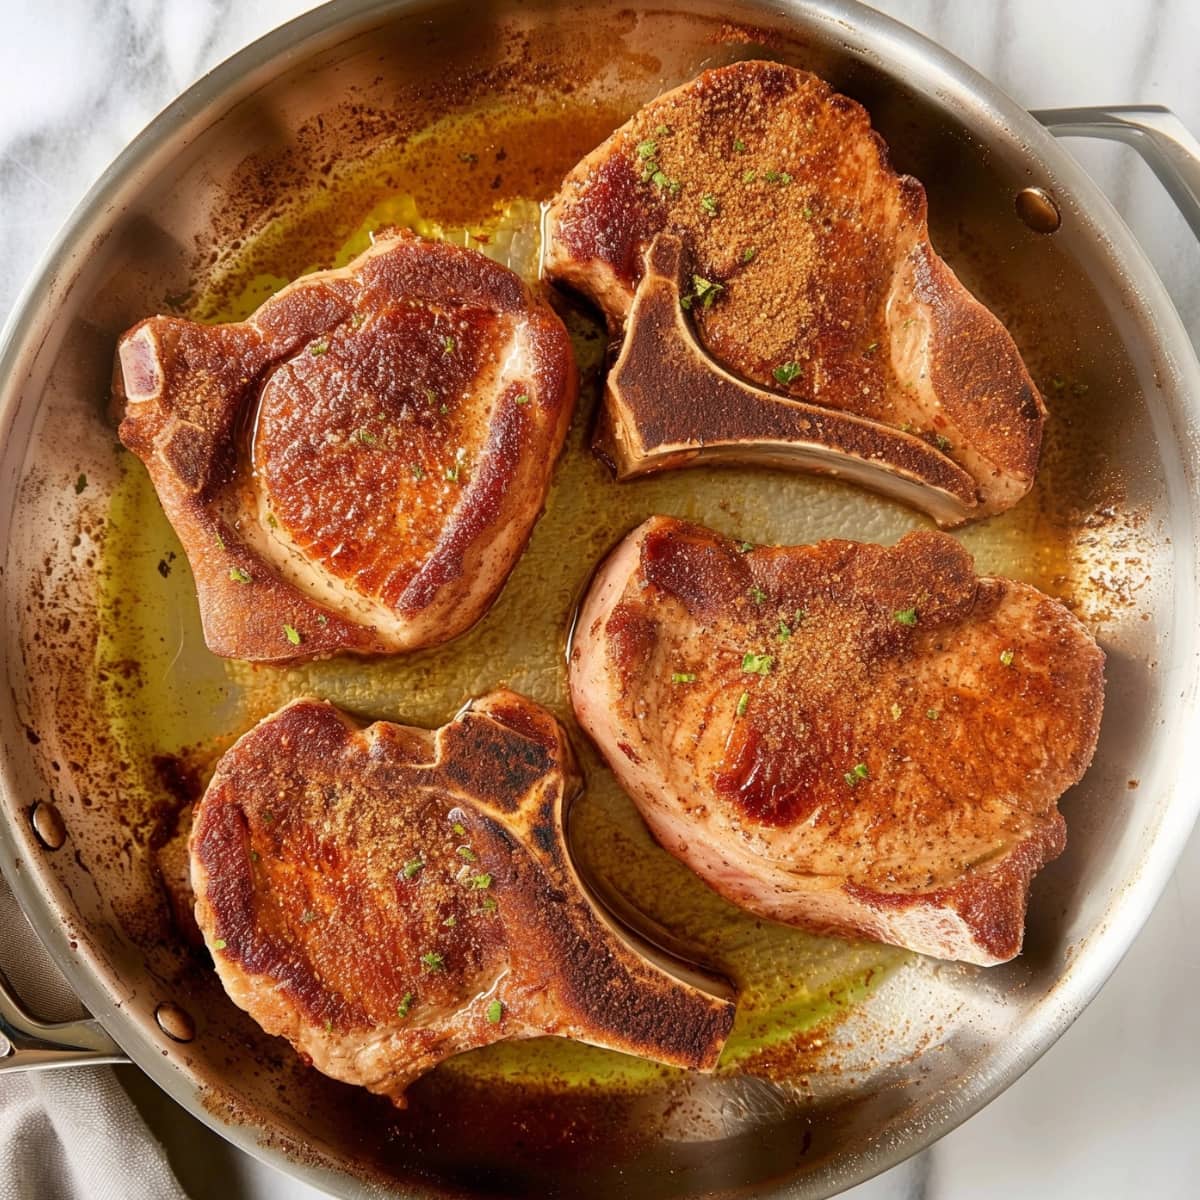 Pork chop with dry rub seasoning seared in a skillet.